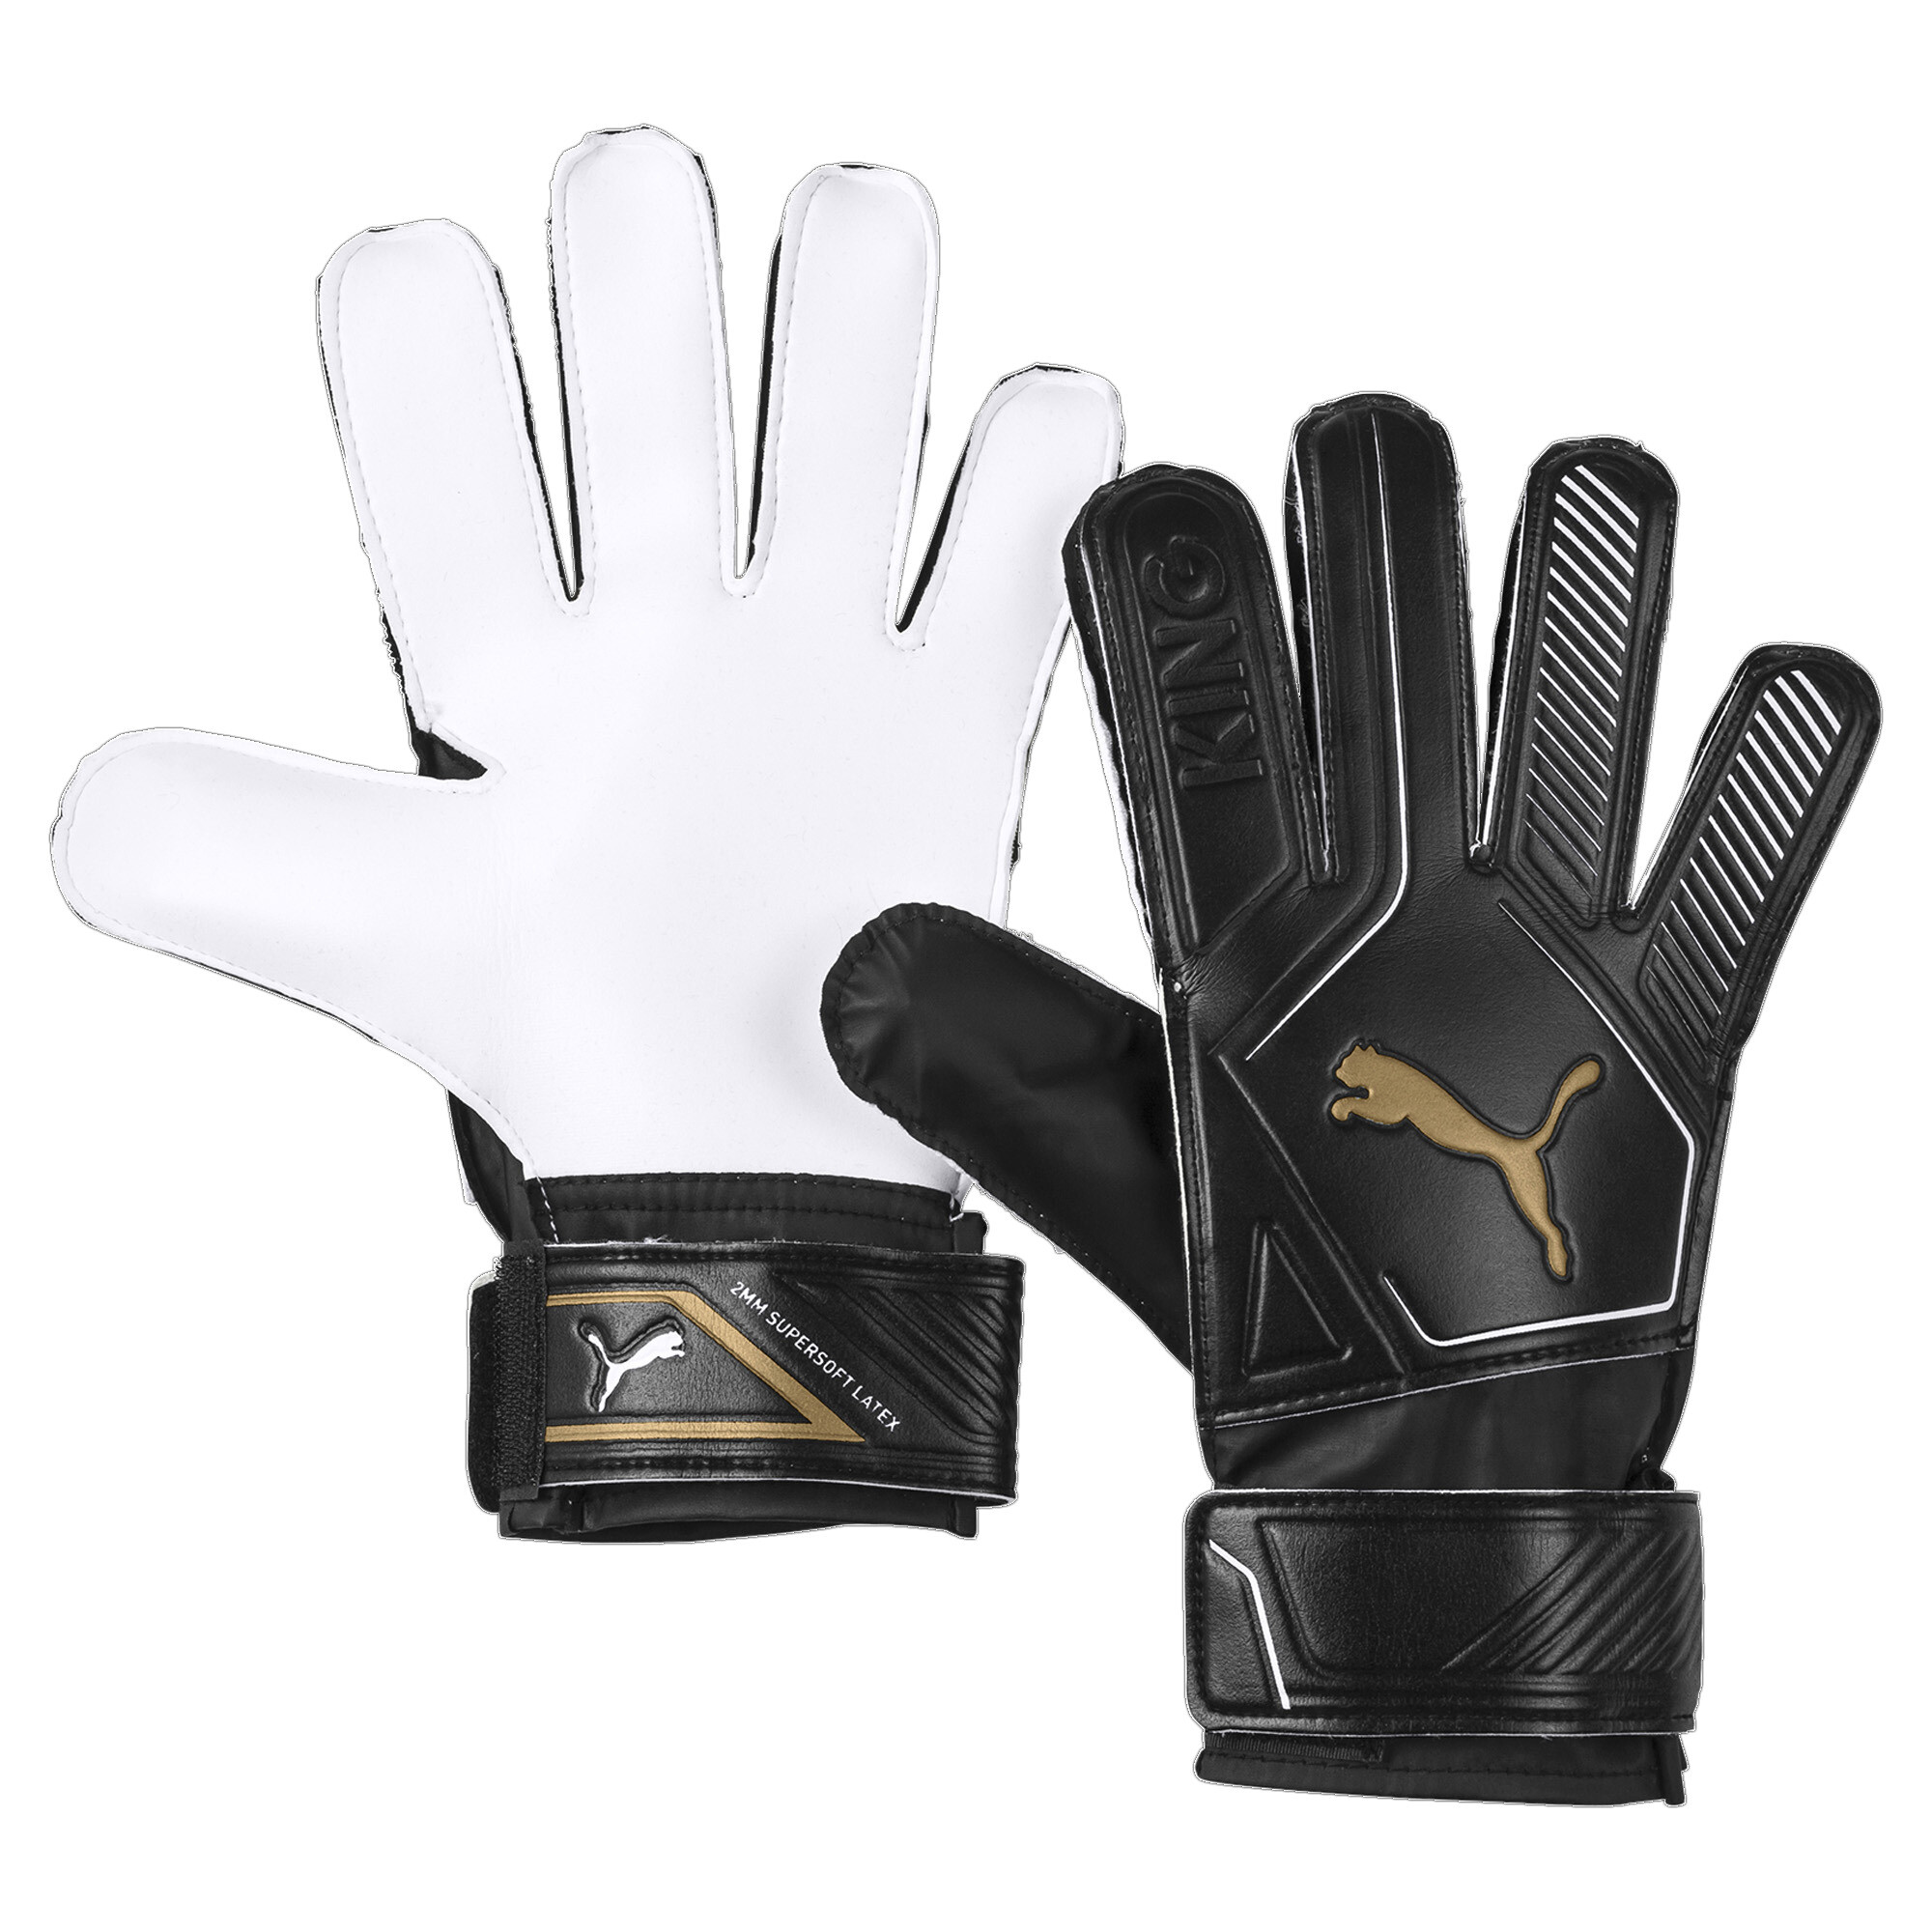 Puma King 4 Goalkeeper Gloves, Black, Size 11, Accessories